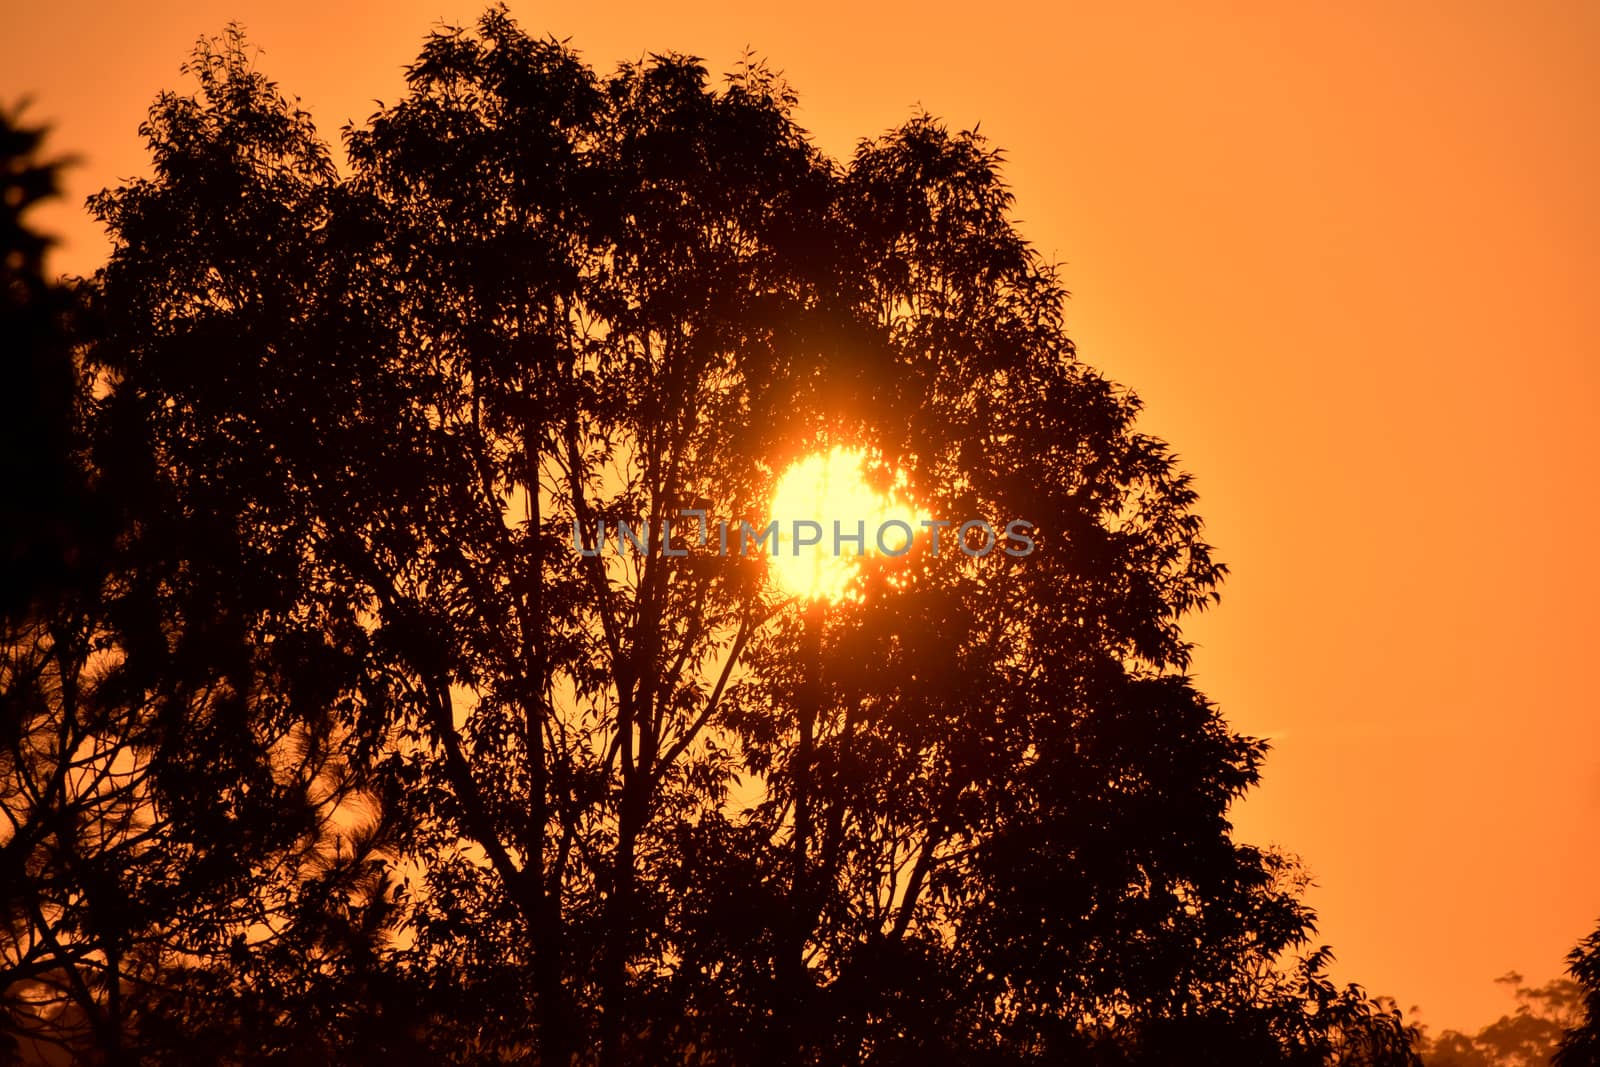 The sun shining through a Eucalyptus tree at dusk